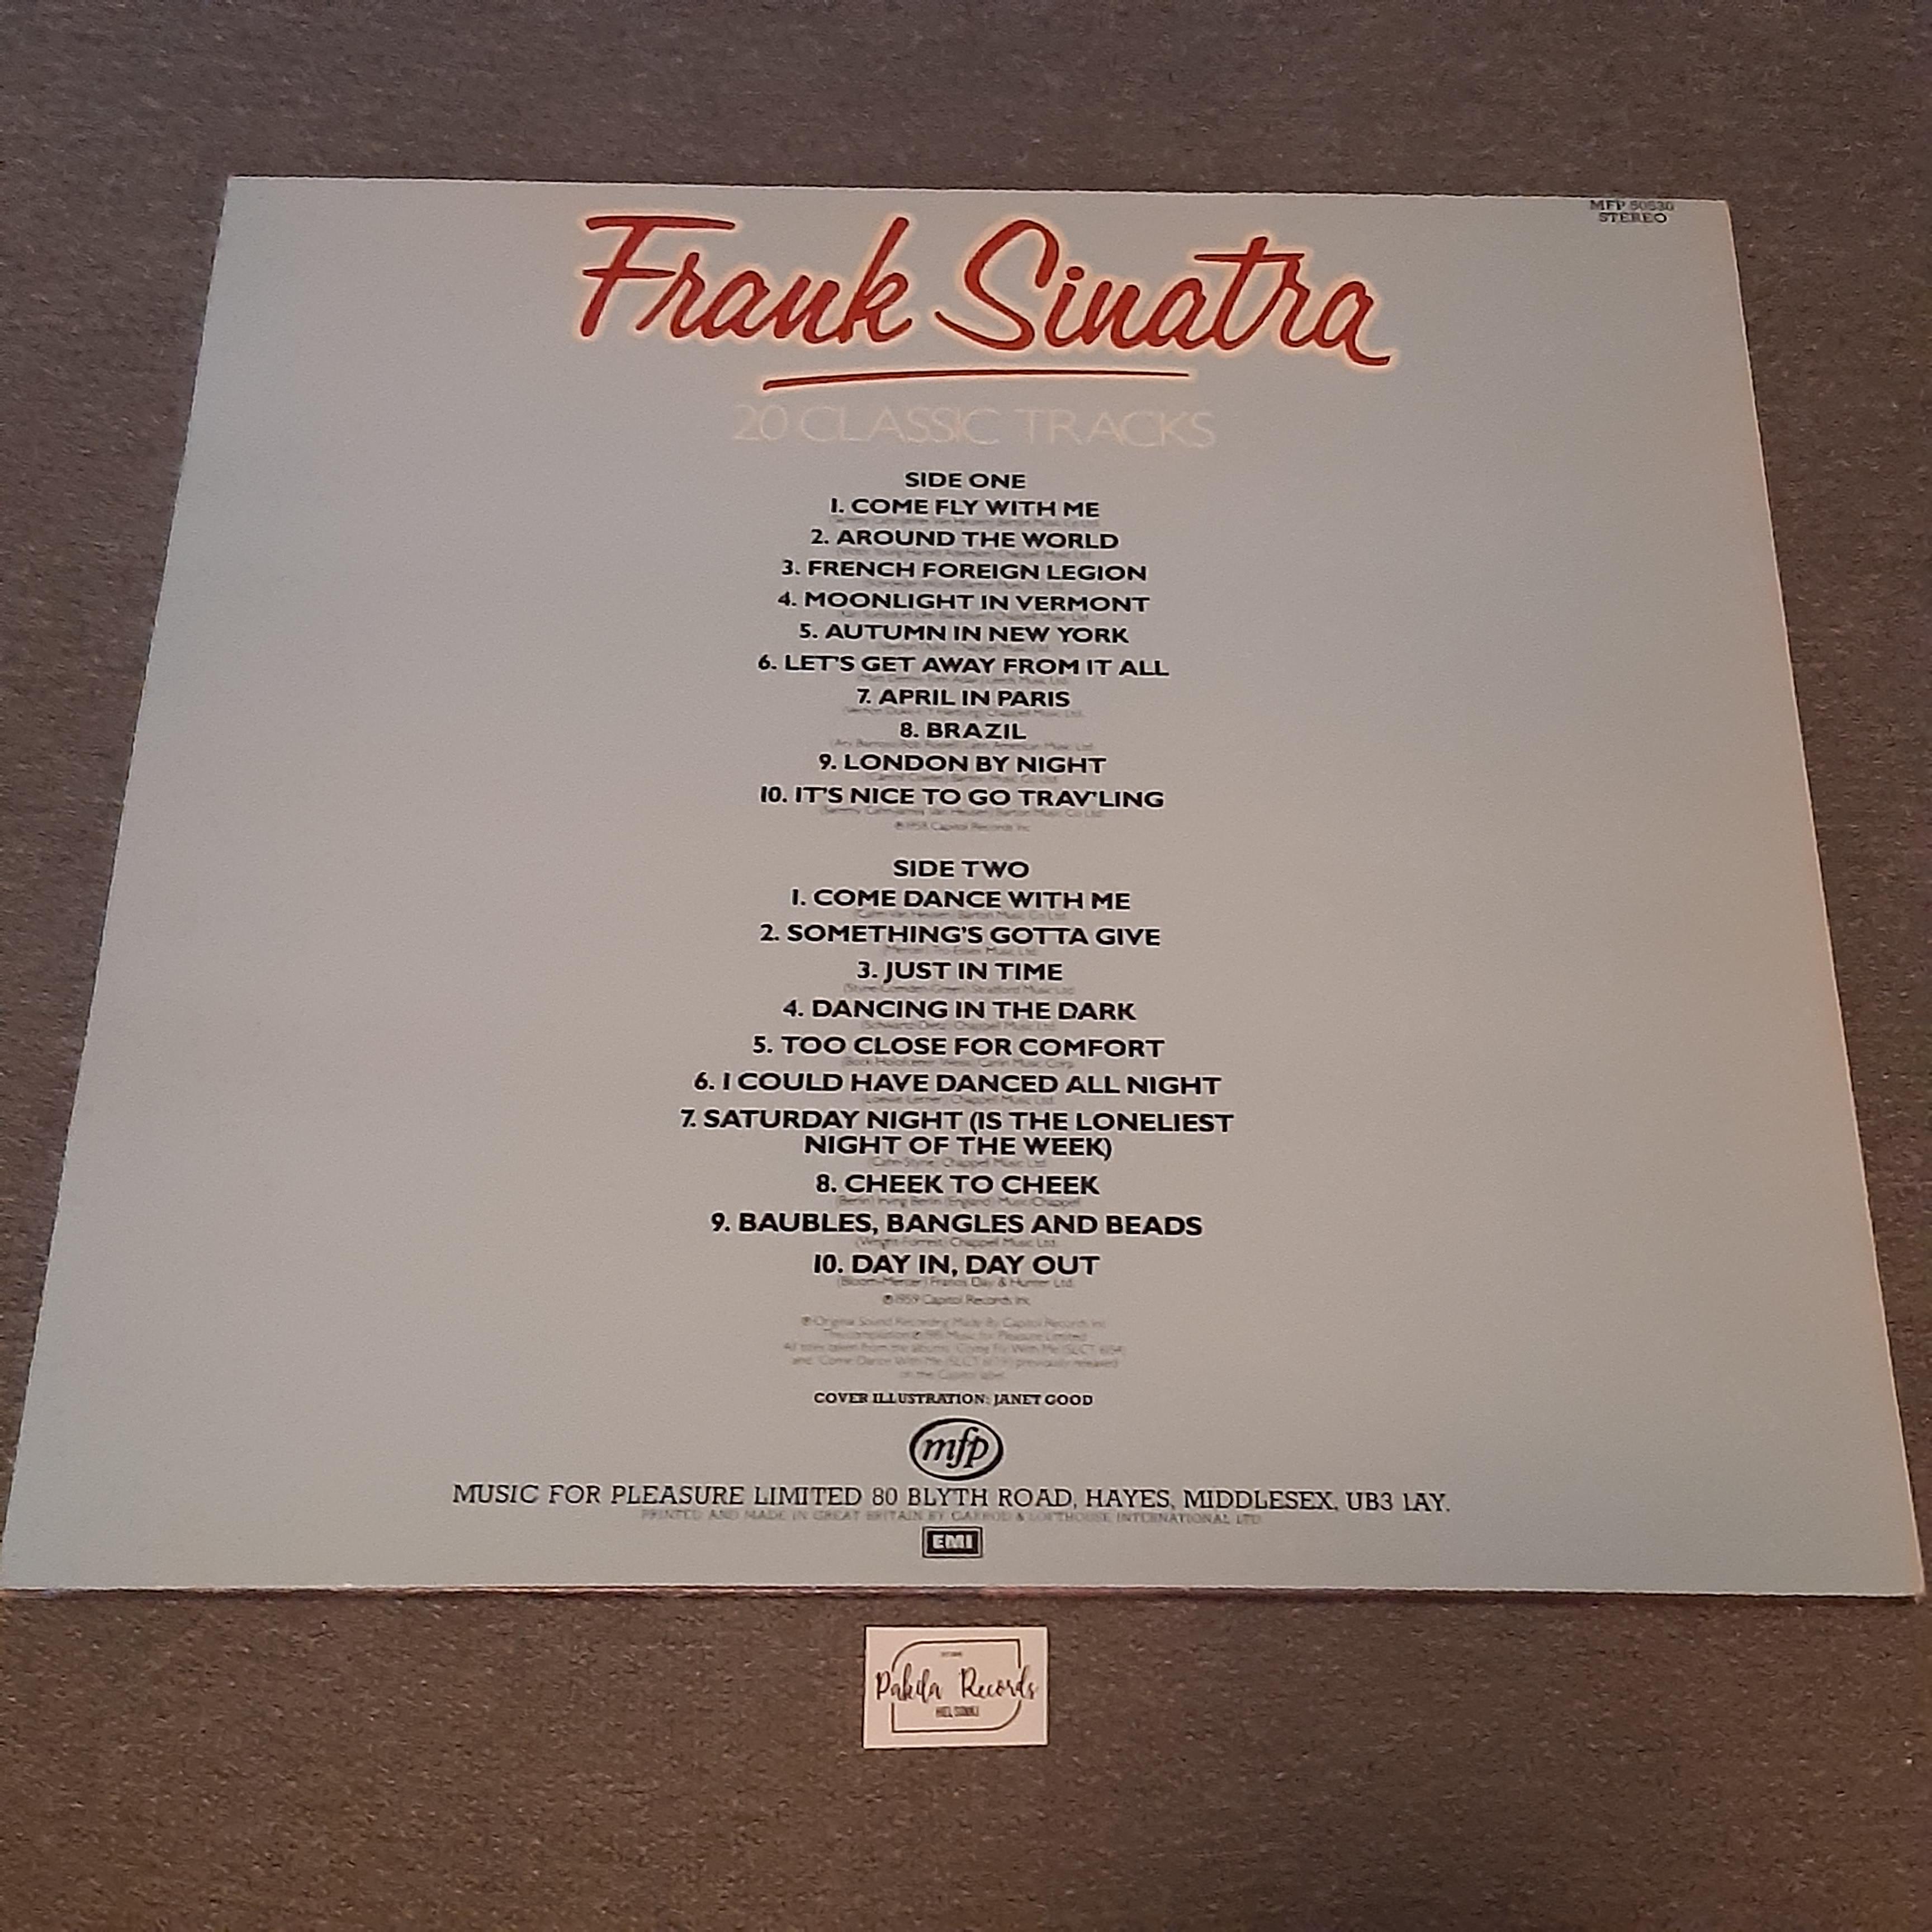 Frank Sinatra - 20 Classic Tracks - LP (käytetty)